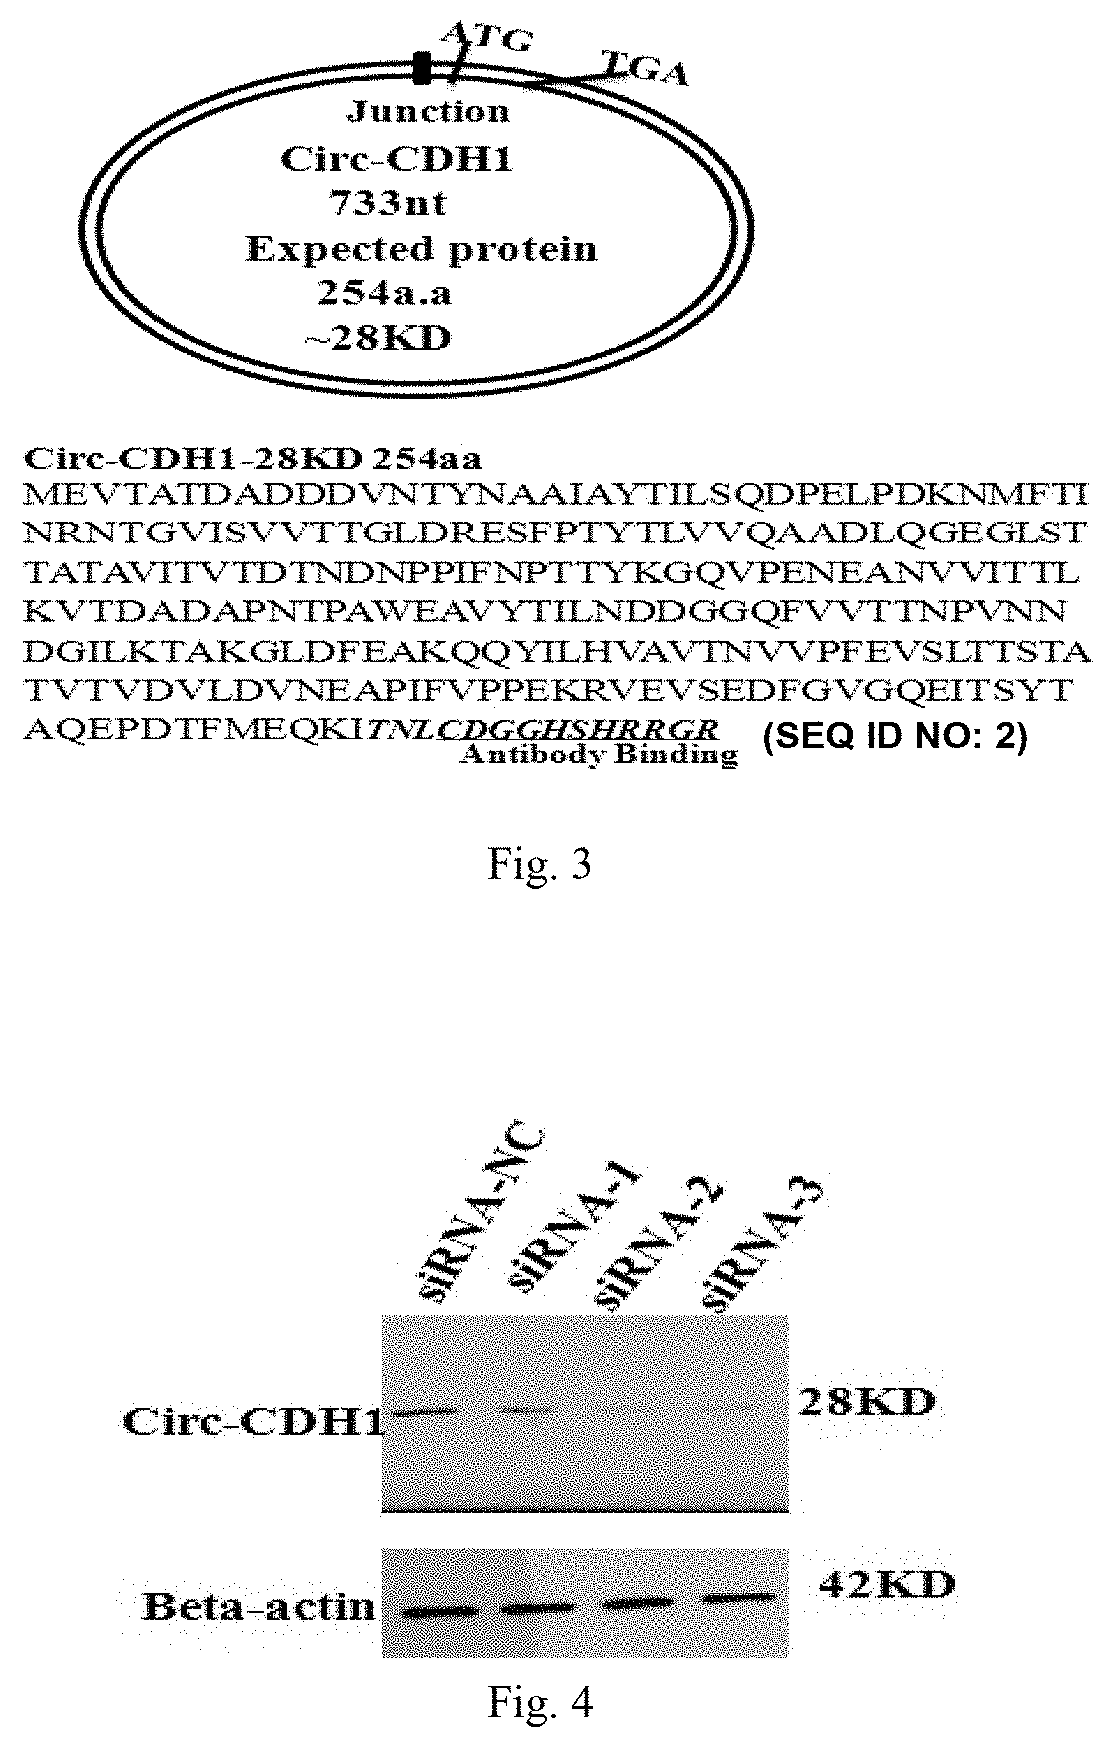 Use of Circ-CDH1 Inhibitors